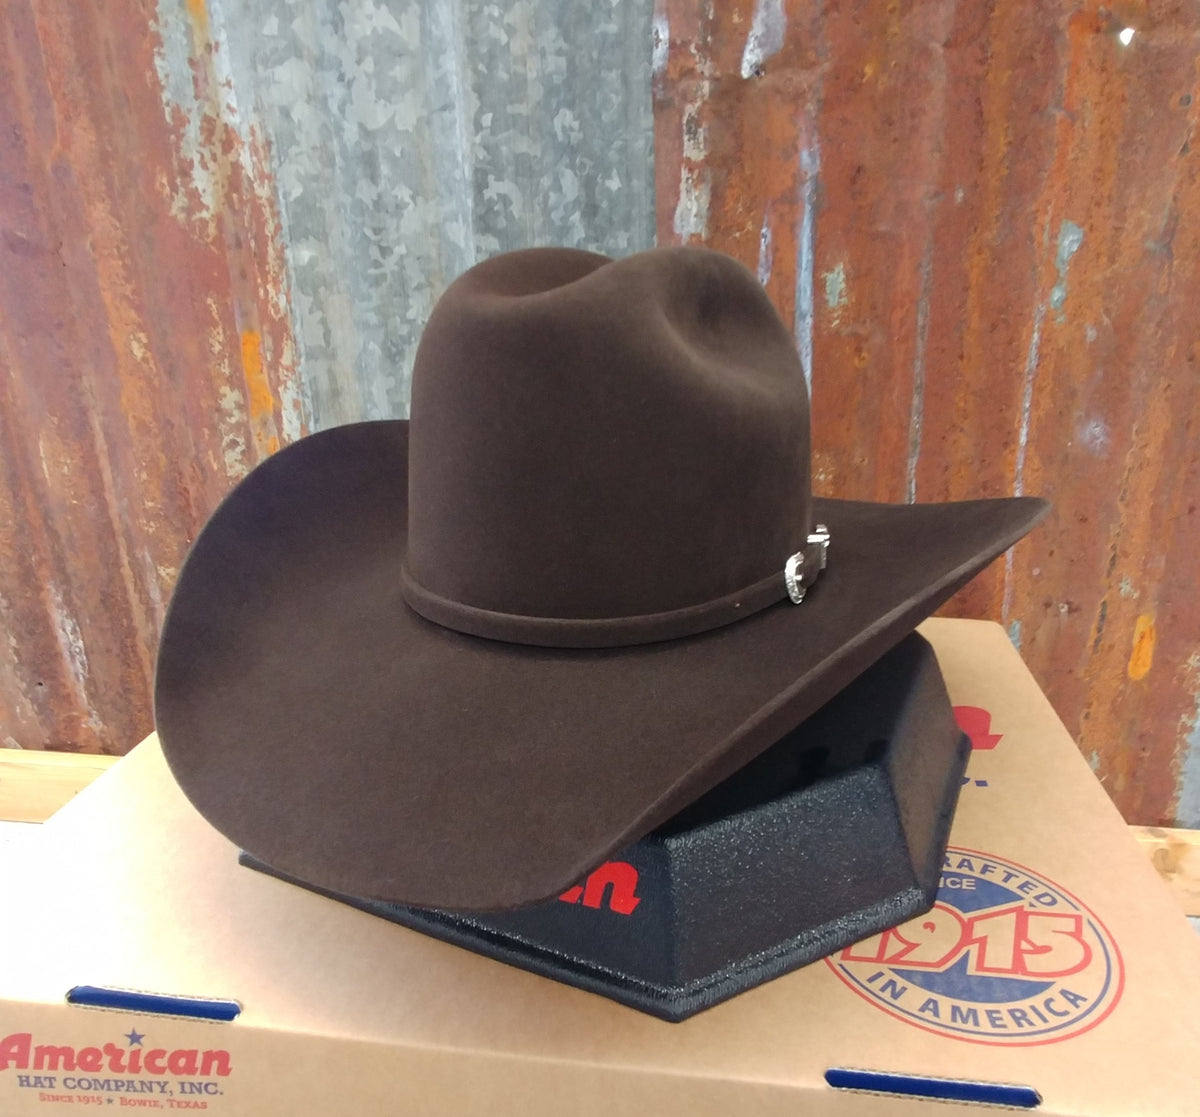 American Hats LLC Hat Box